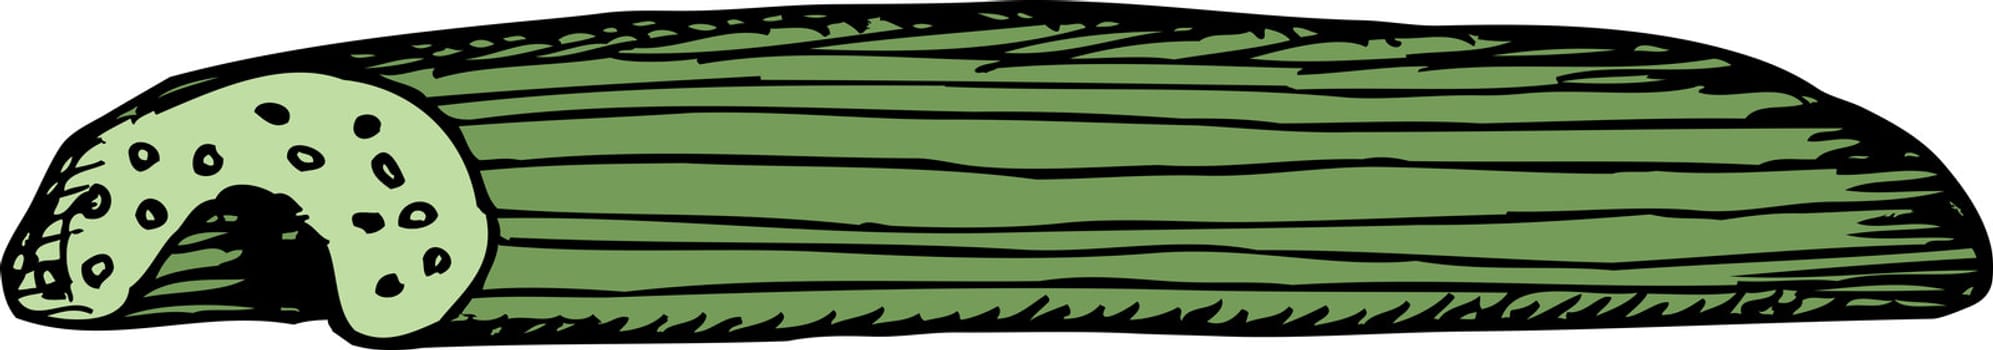 Single cut celery stick cartoon over isolated background